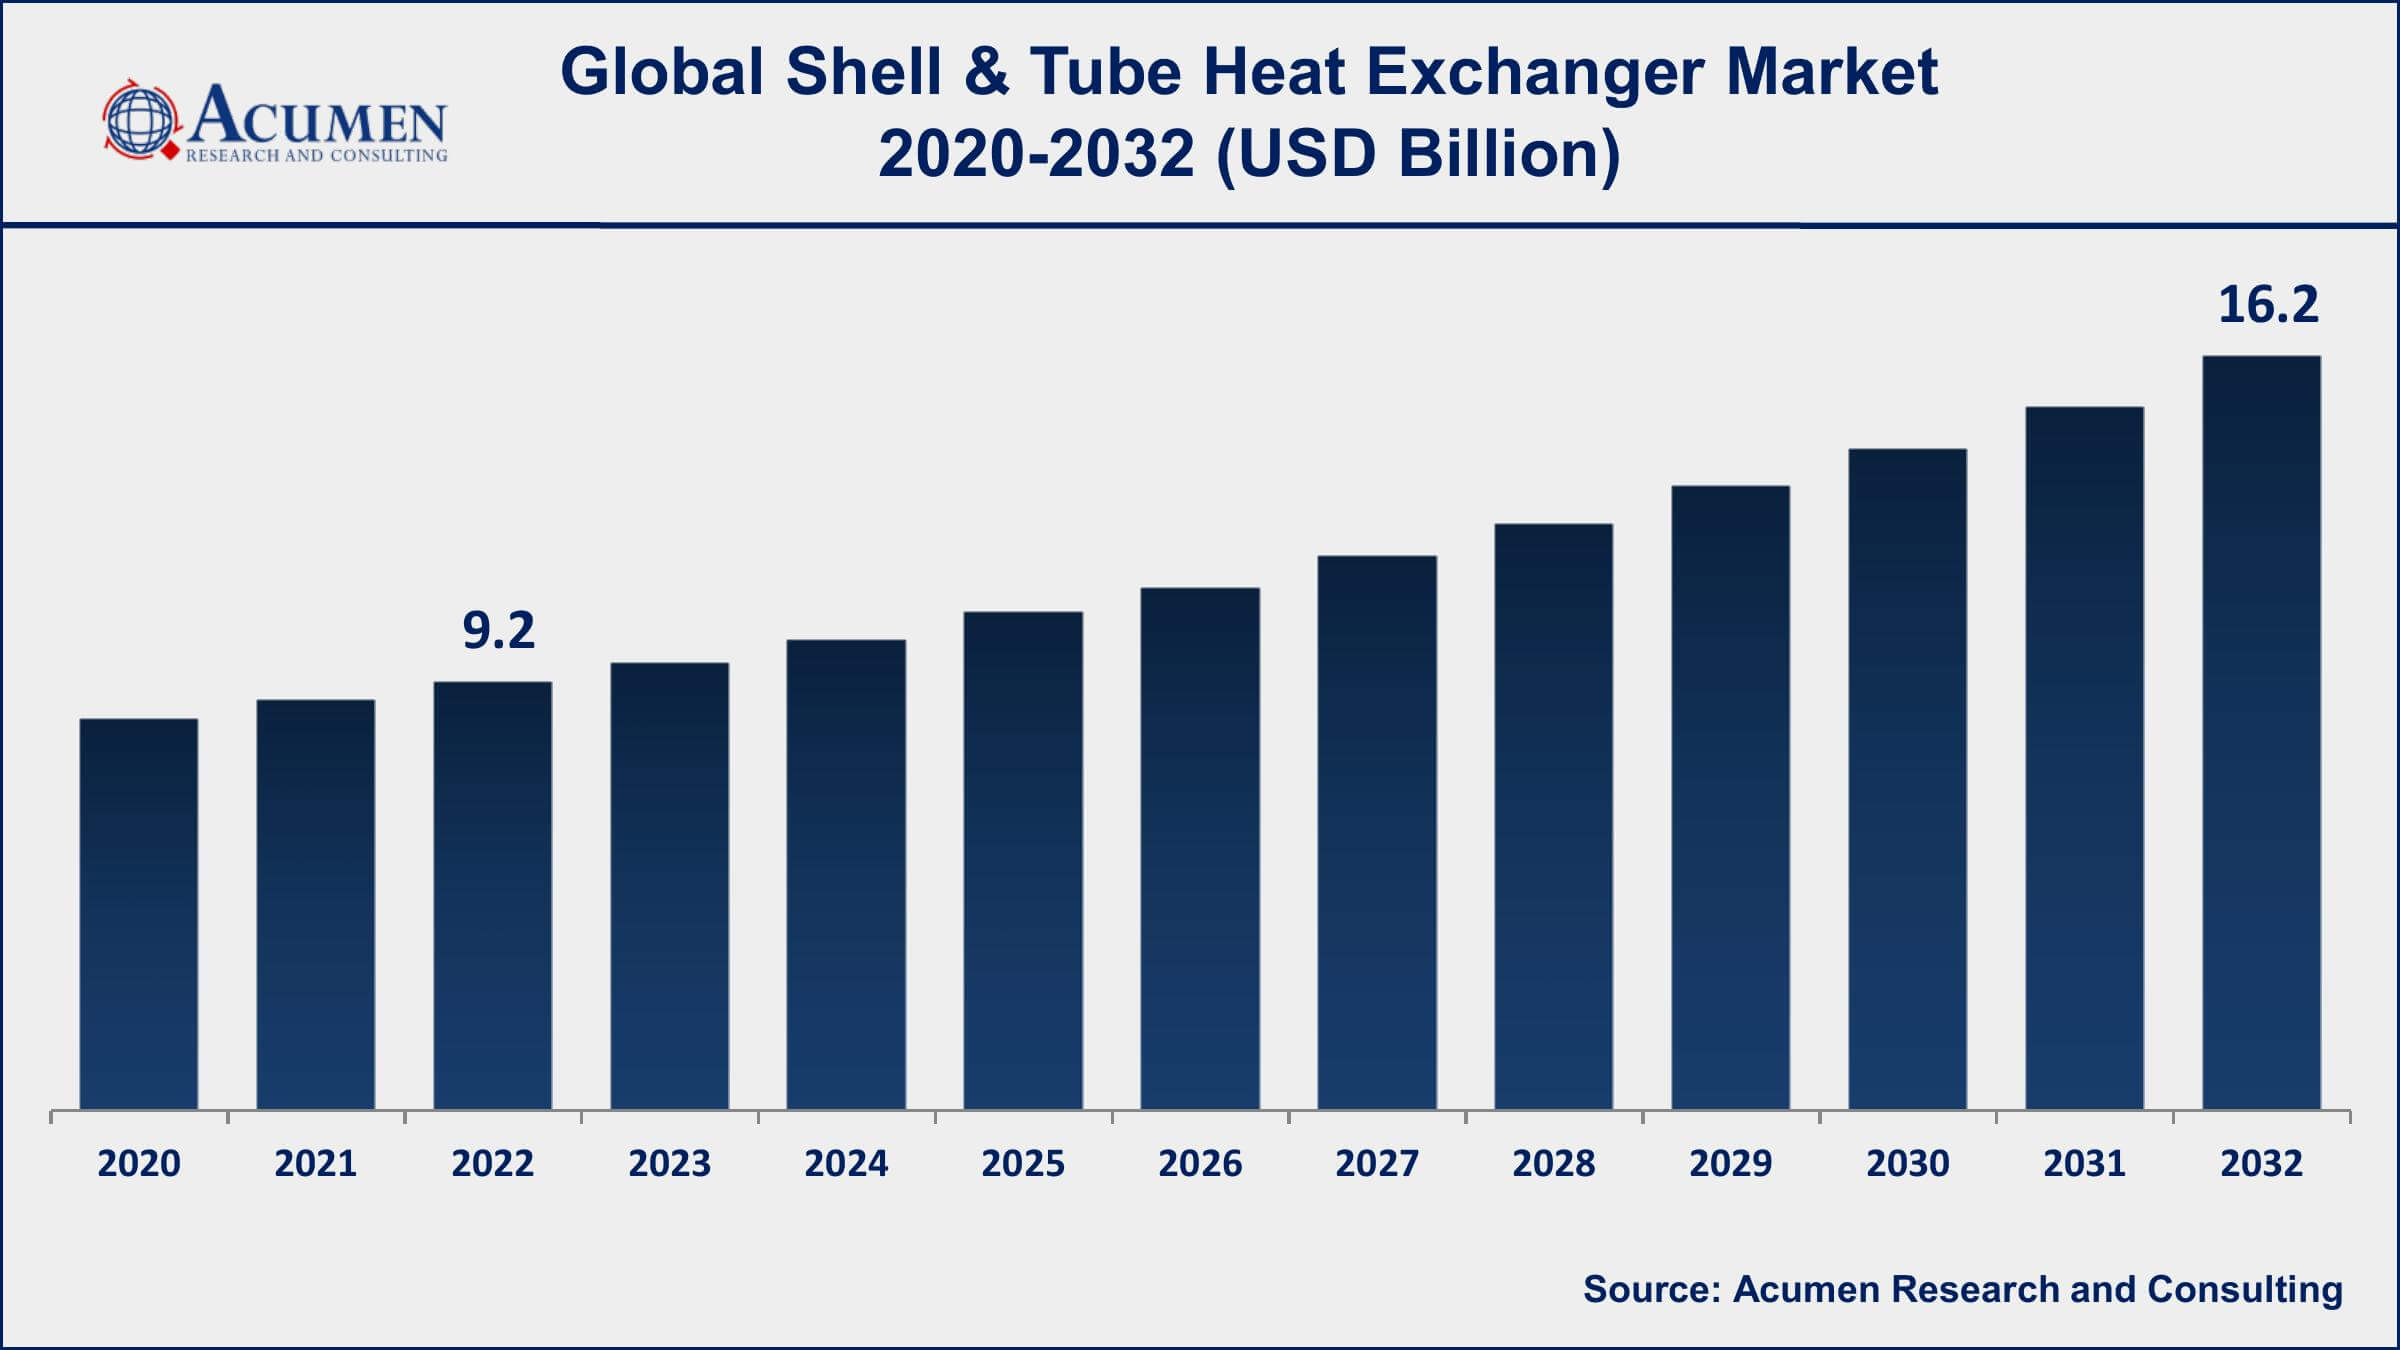 Shell & Tube Heat Exchanger Market Dynamics